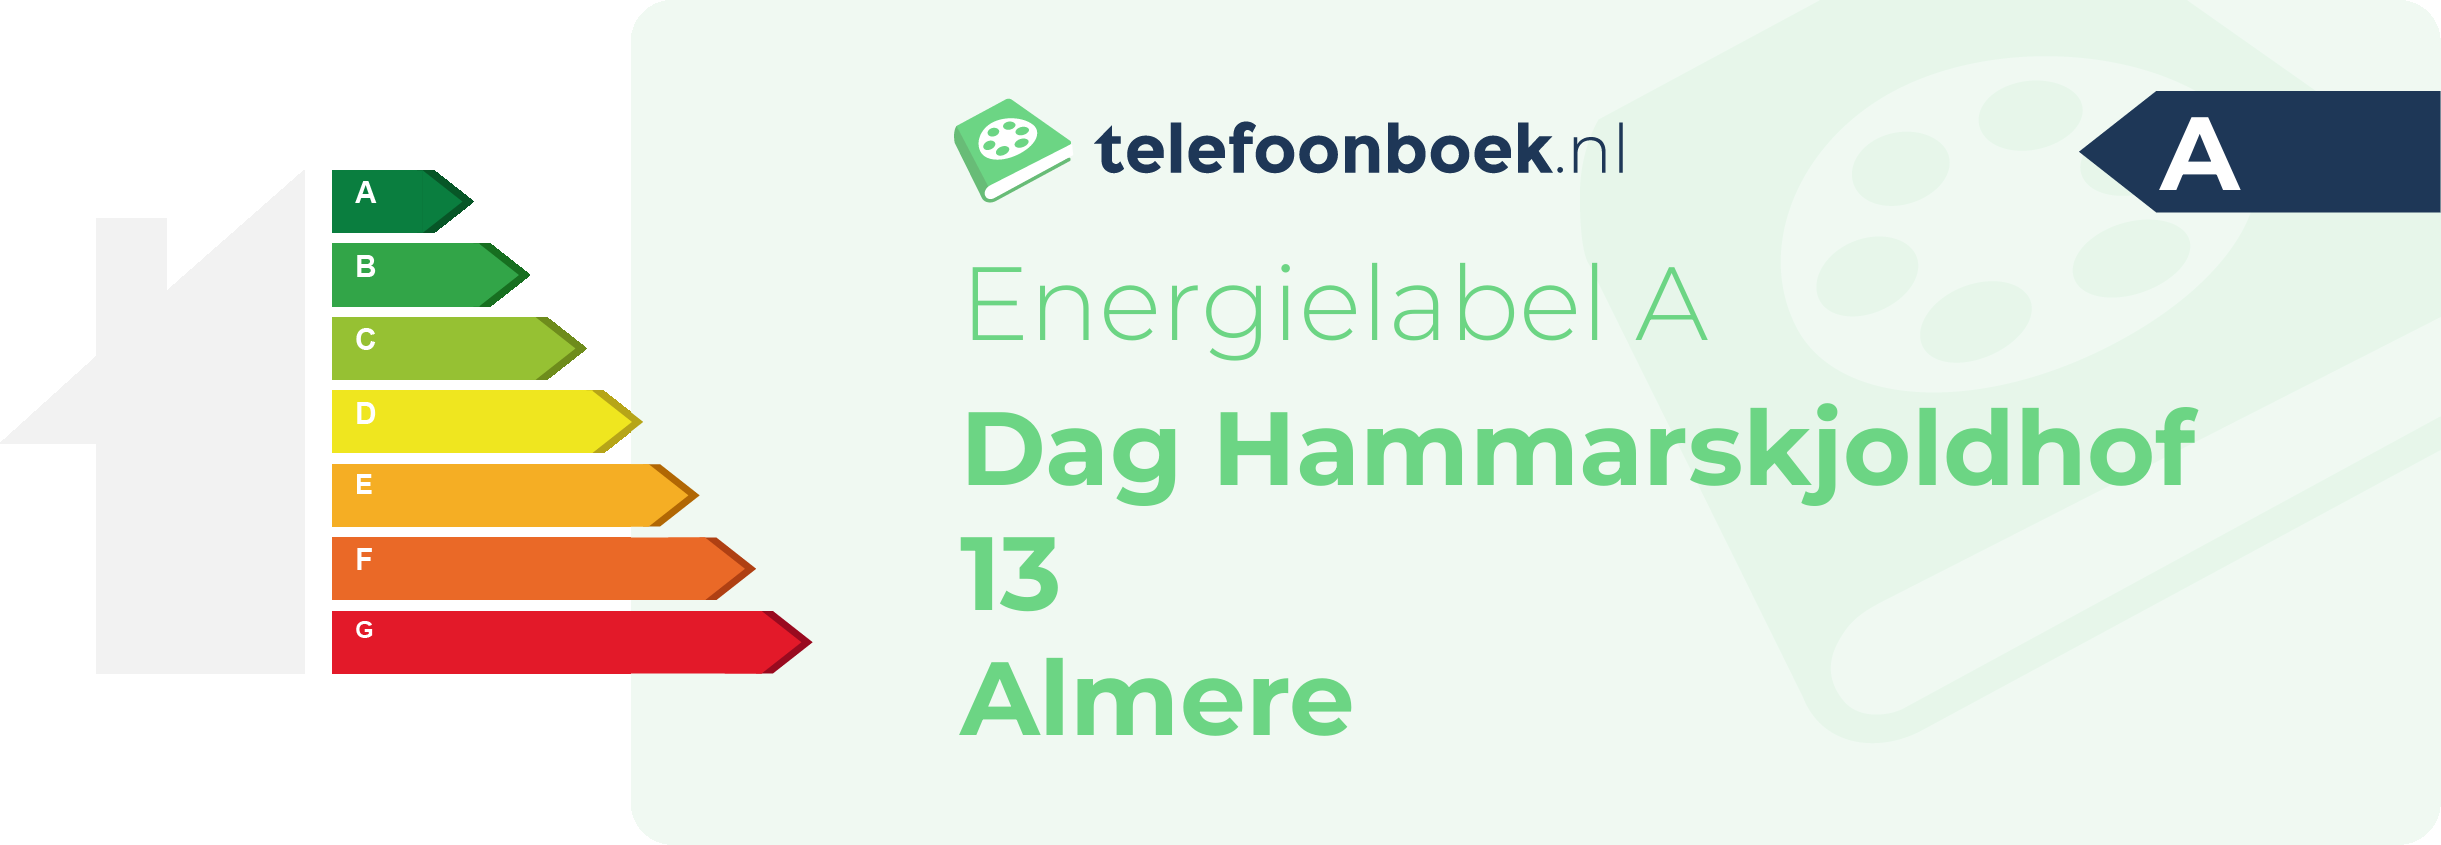 Energielabel Dag Hammarskjoldhof 13 Almere